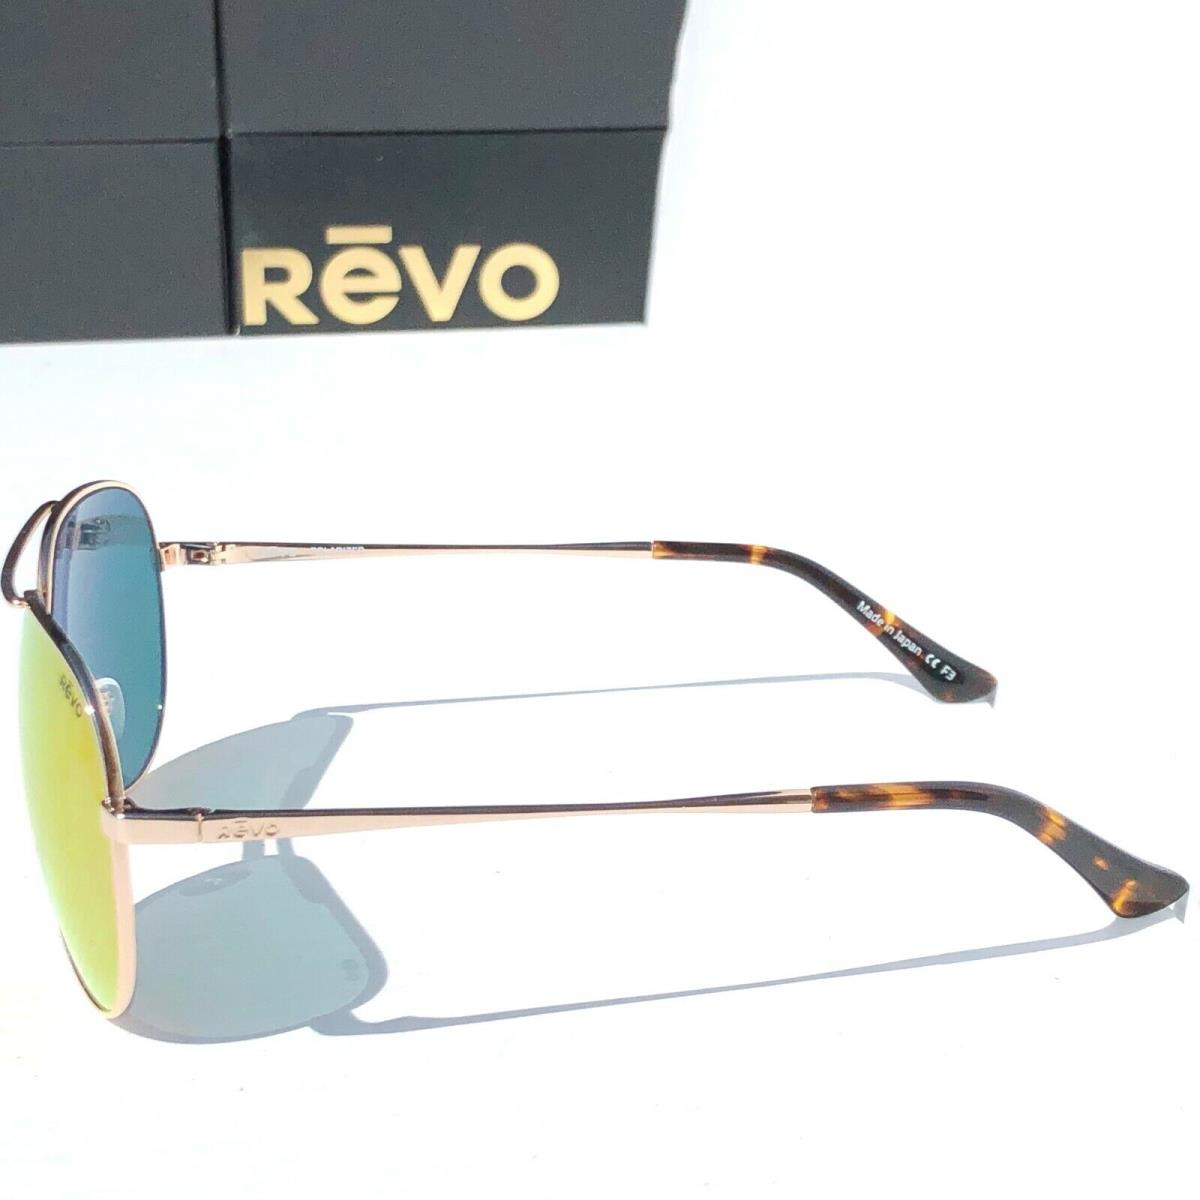 Revo sunglasses RELAY - Gold Frame, Spectra - Pink Orange Lens